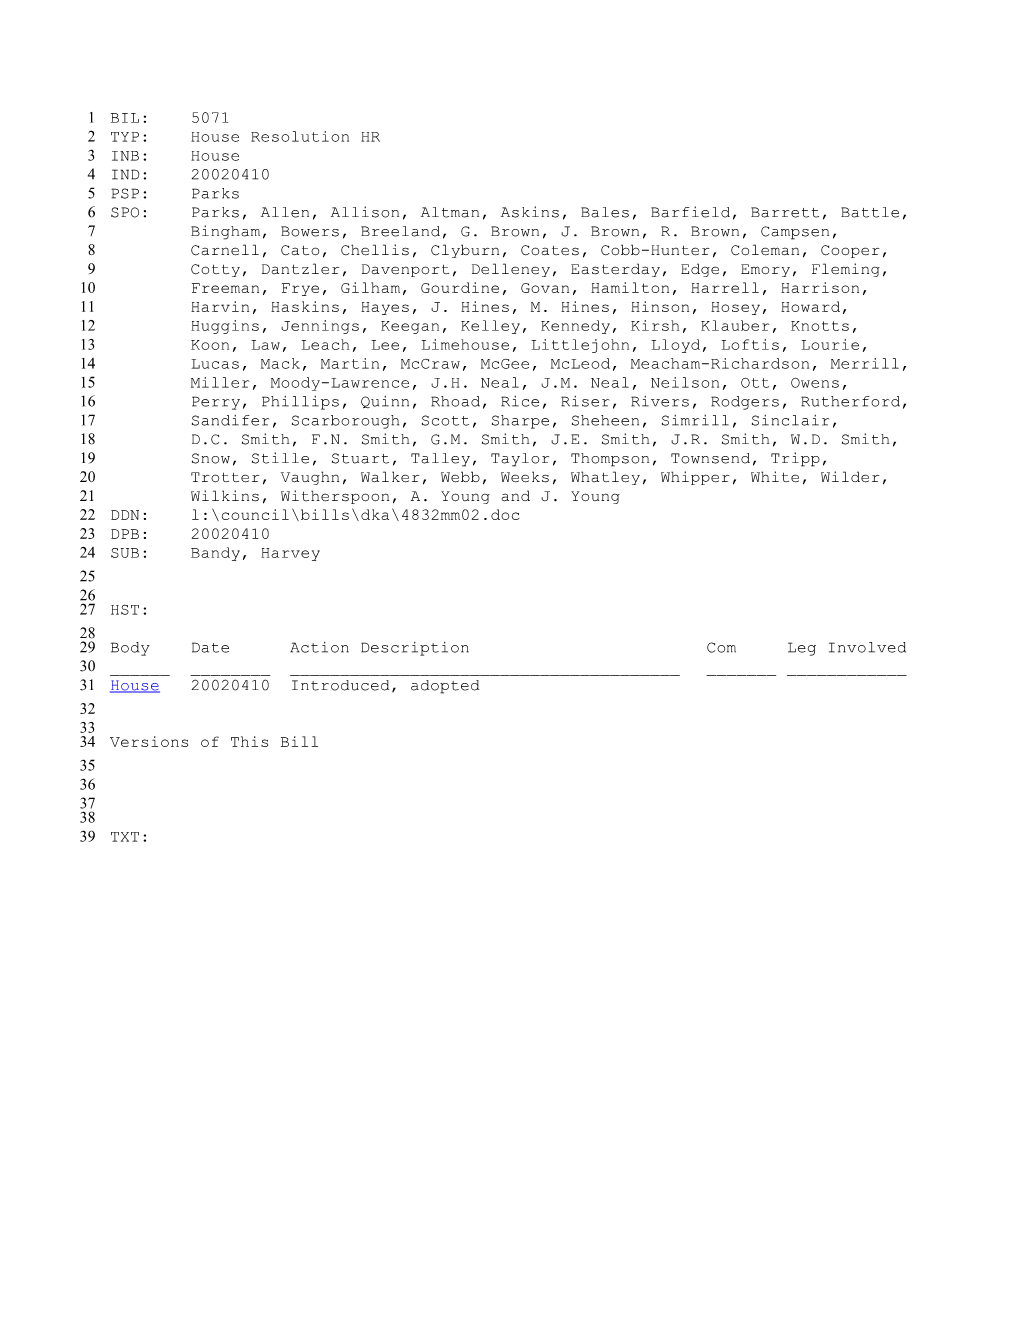 2001-2002 Bill 5071: Bandy, Harvey - South Carolina Legislature Online